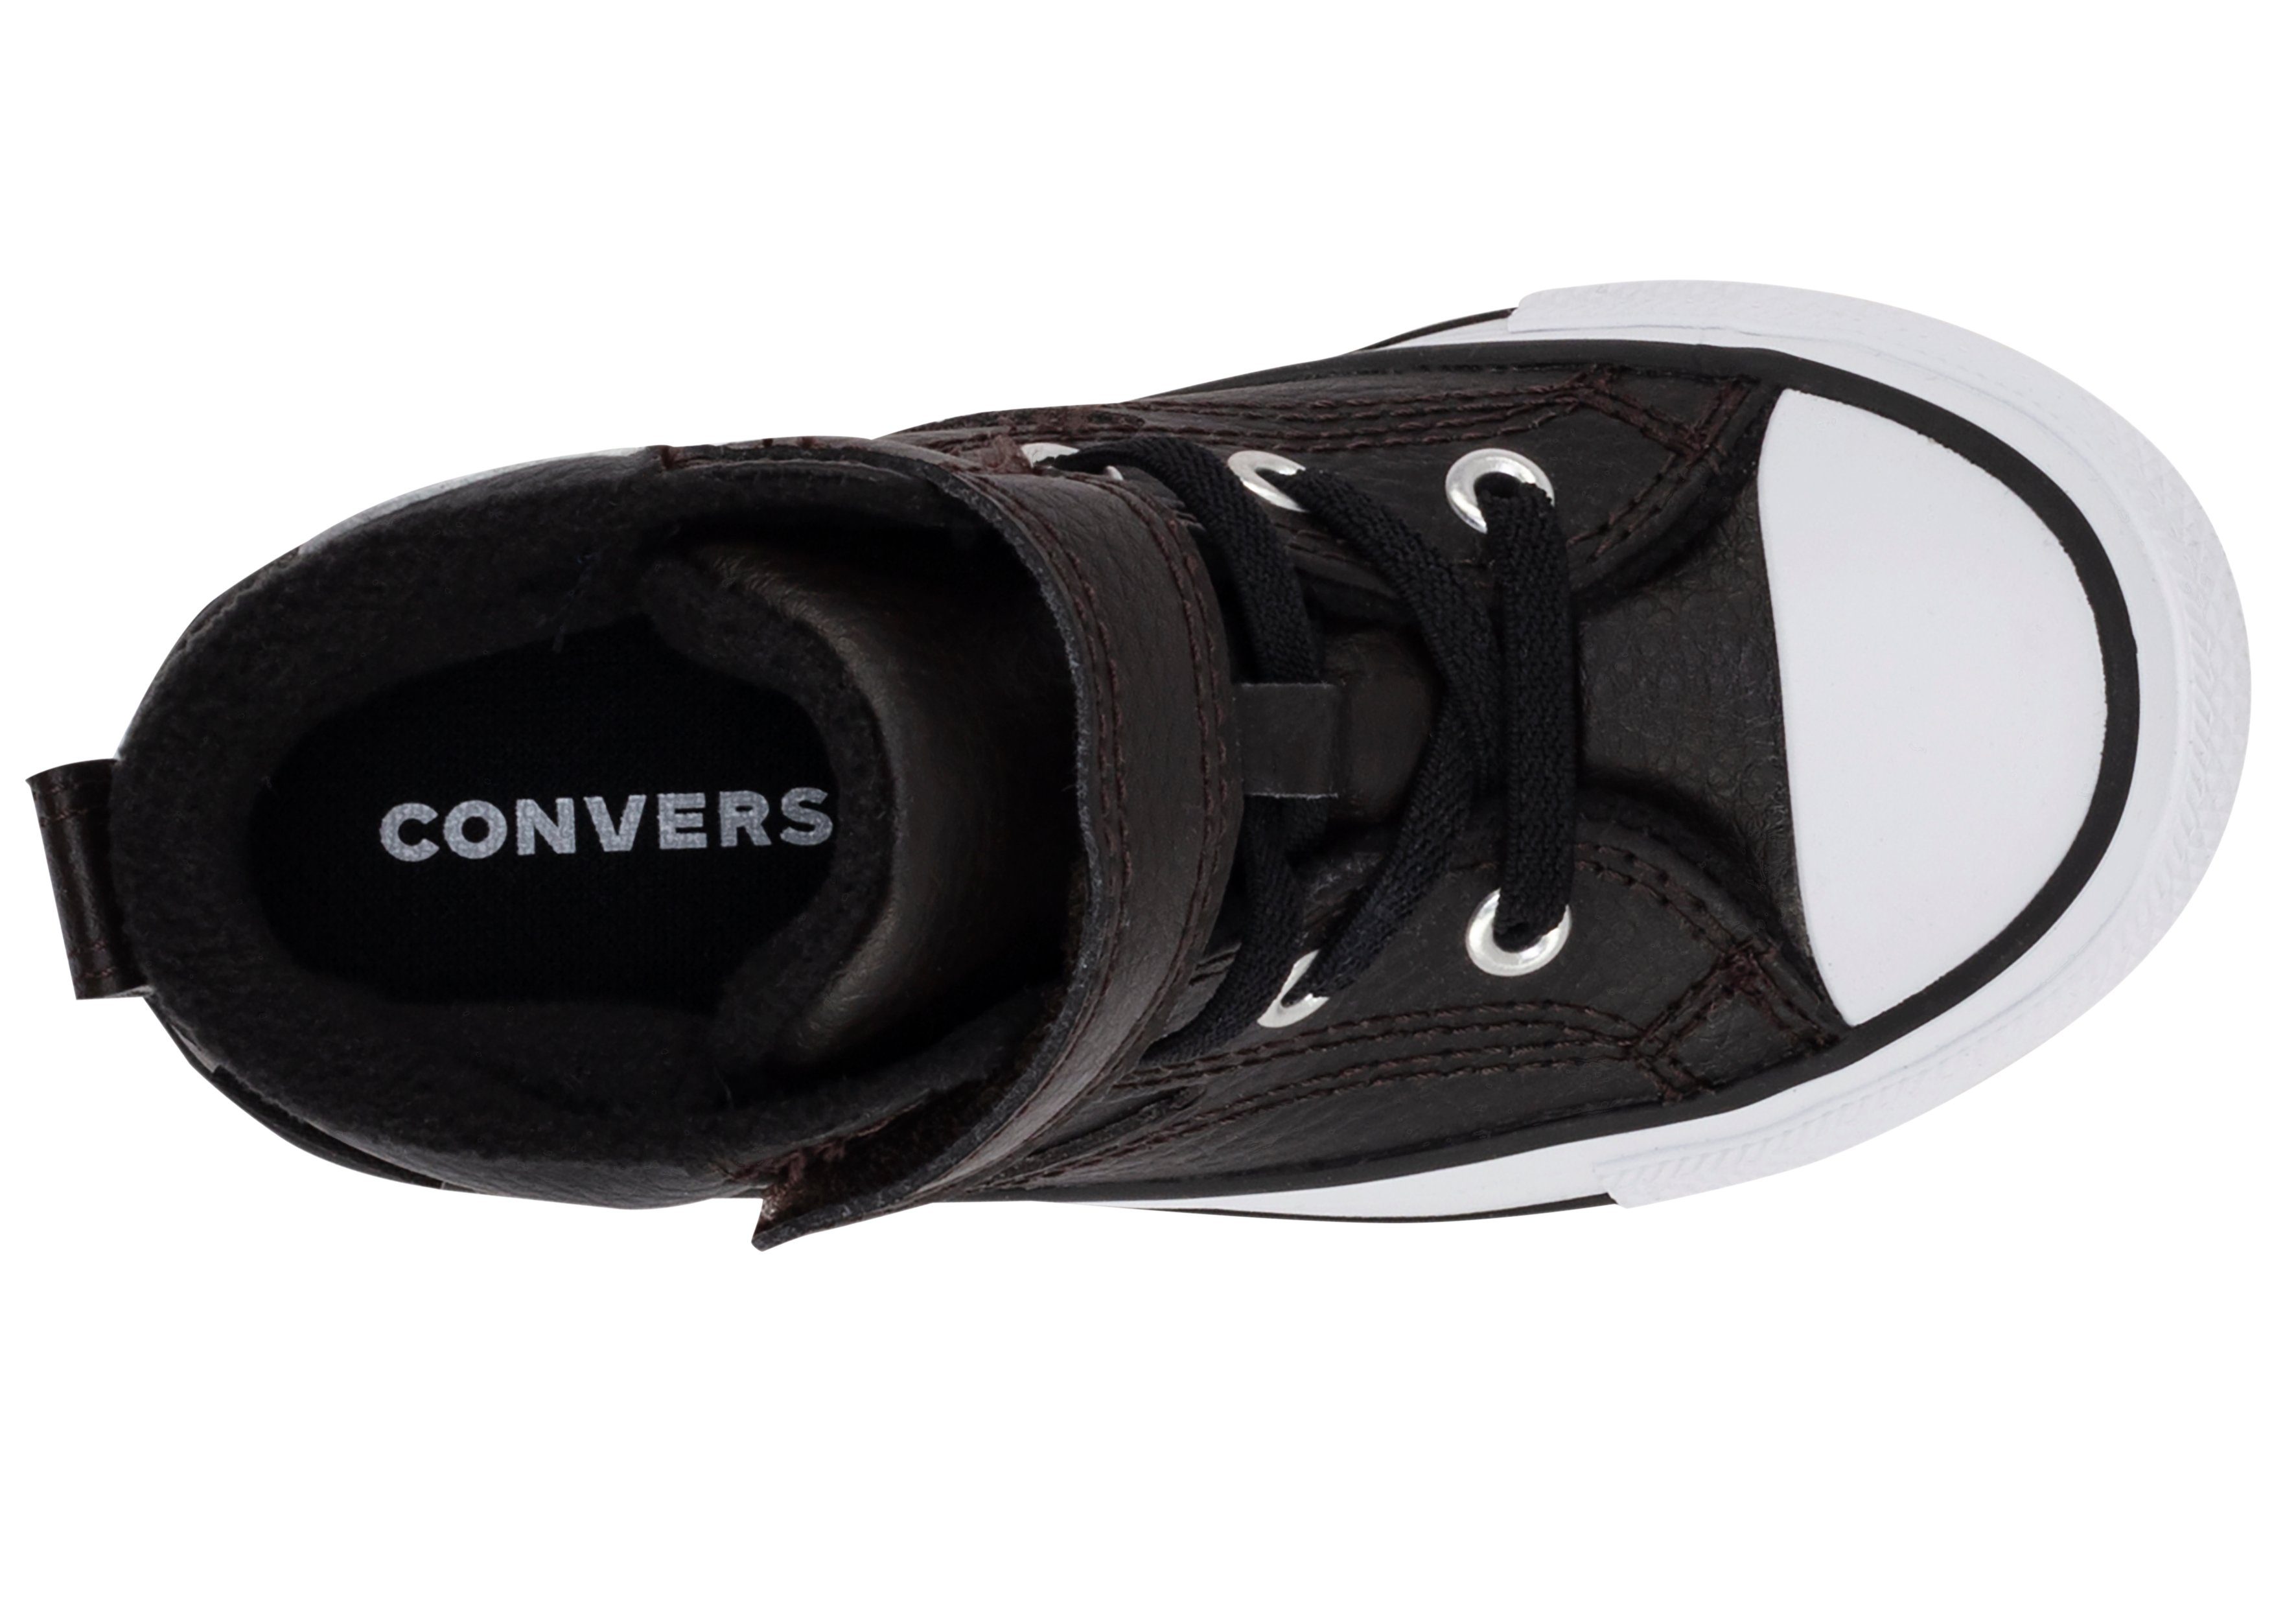 Converse CHUCK TAYLOR ALL STAR ON MALDE Warmfutter EASY Sneaker